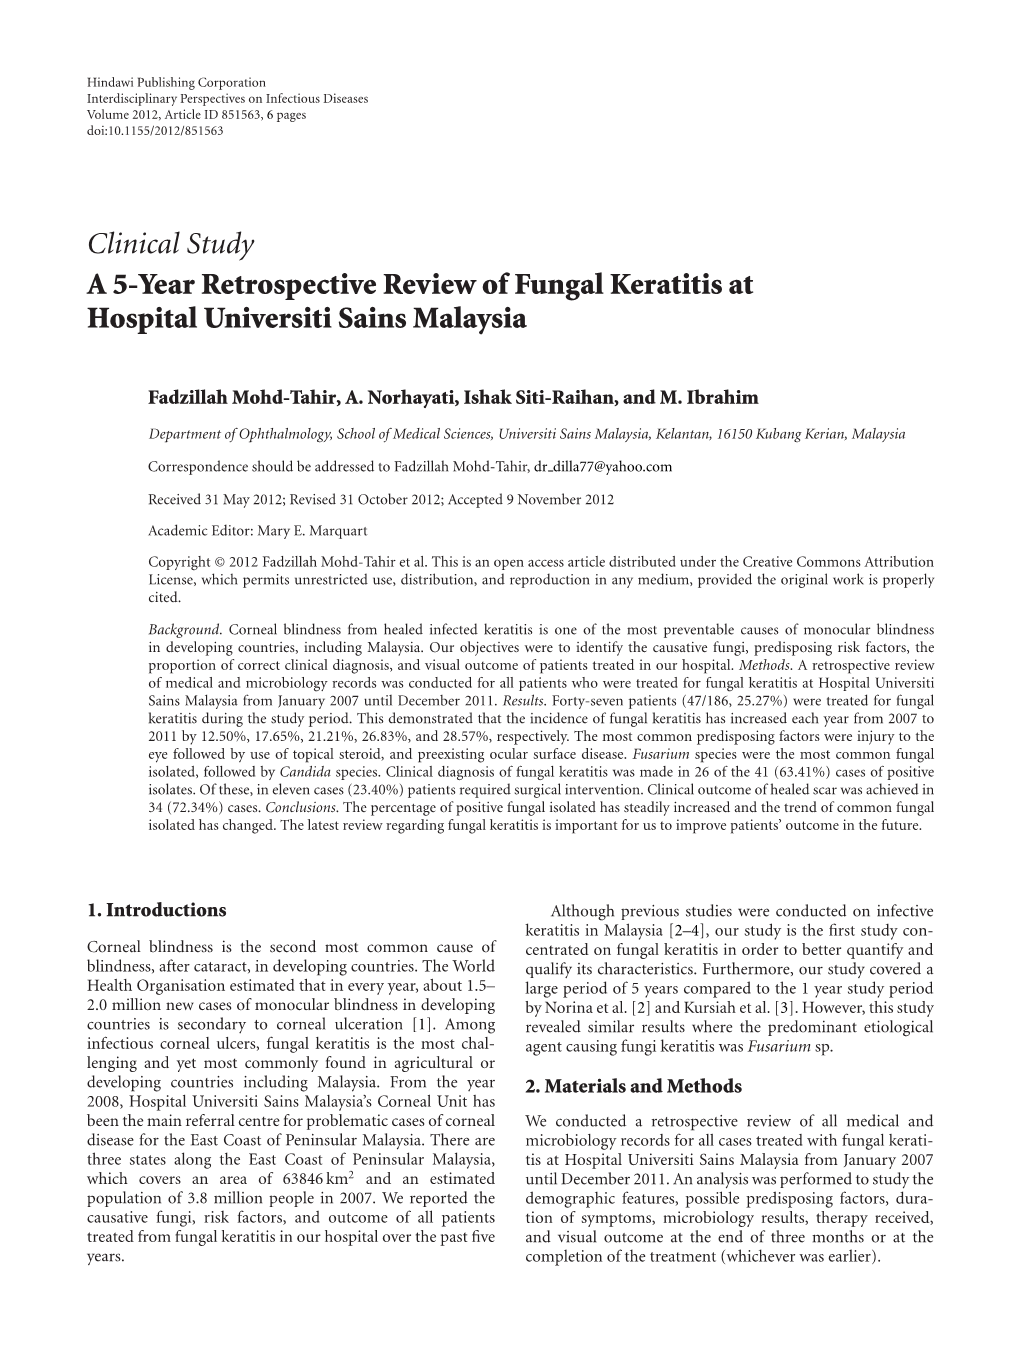 A 5-Year Retrospective Review of Fungal Keratitis at Hospital Universiti Sains Malaysia